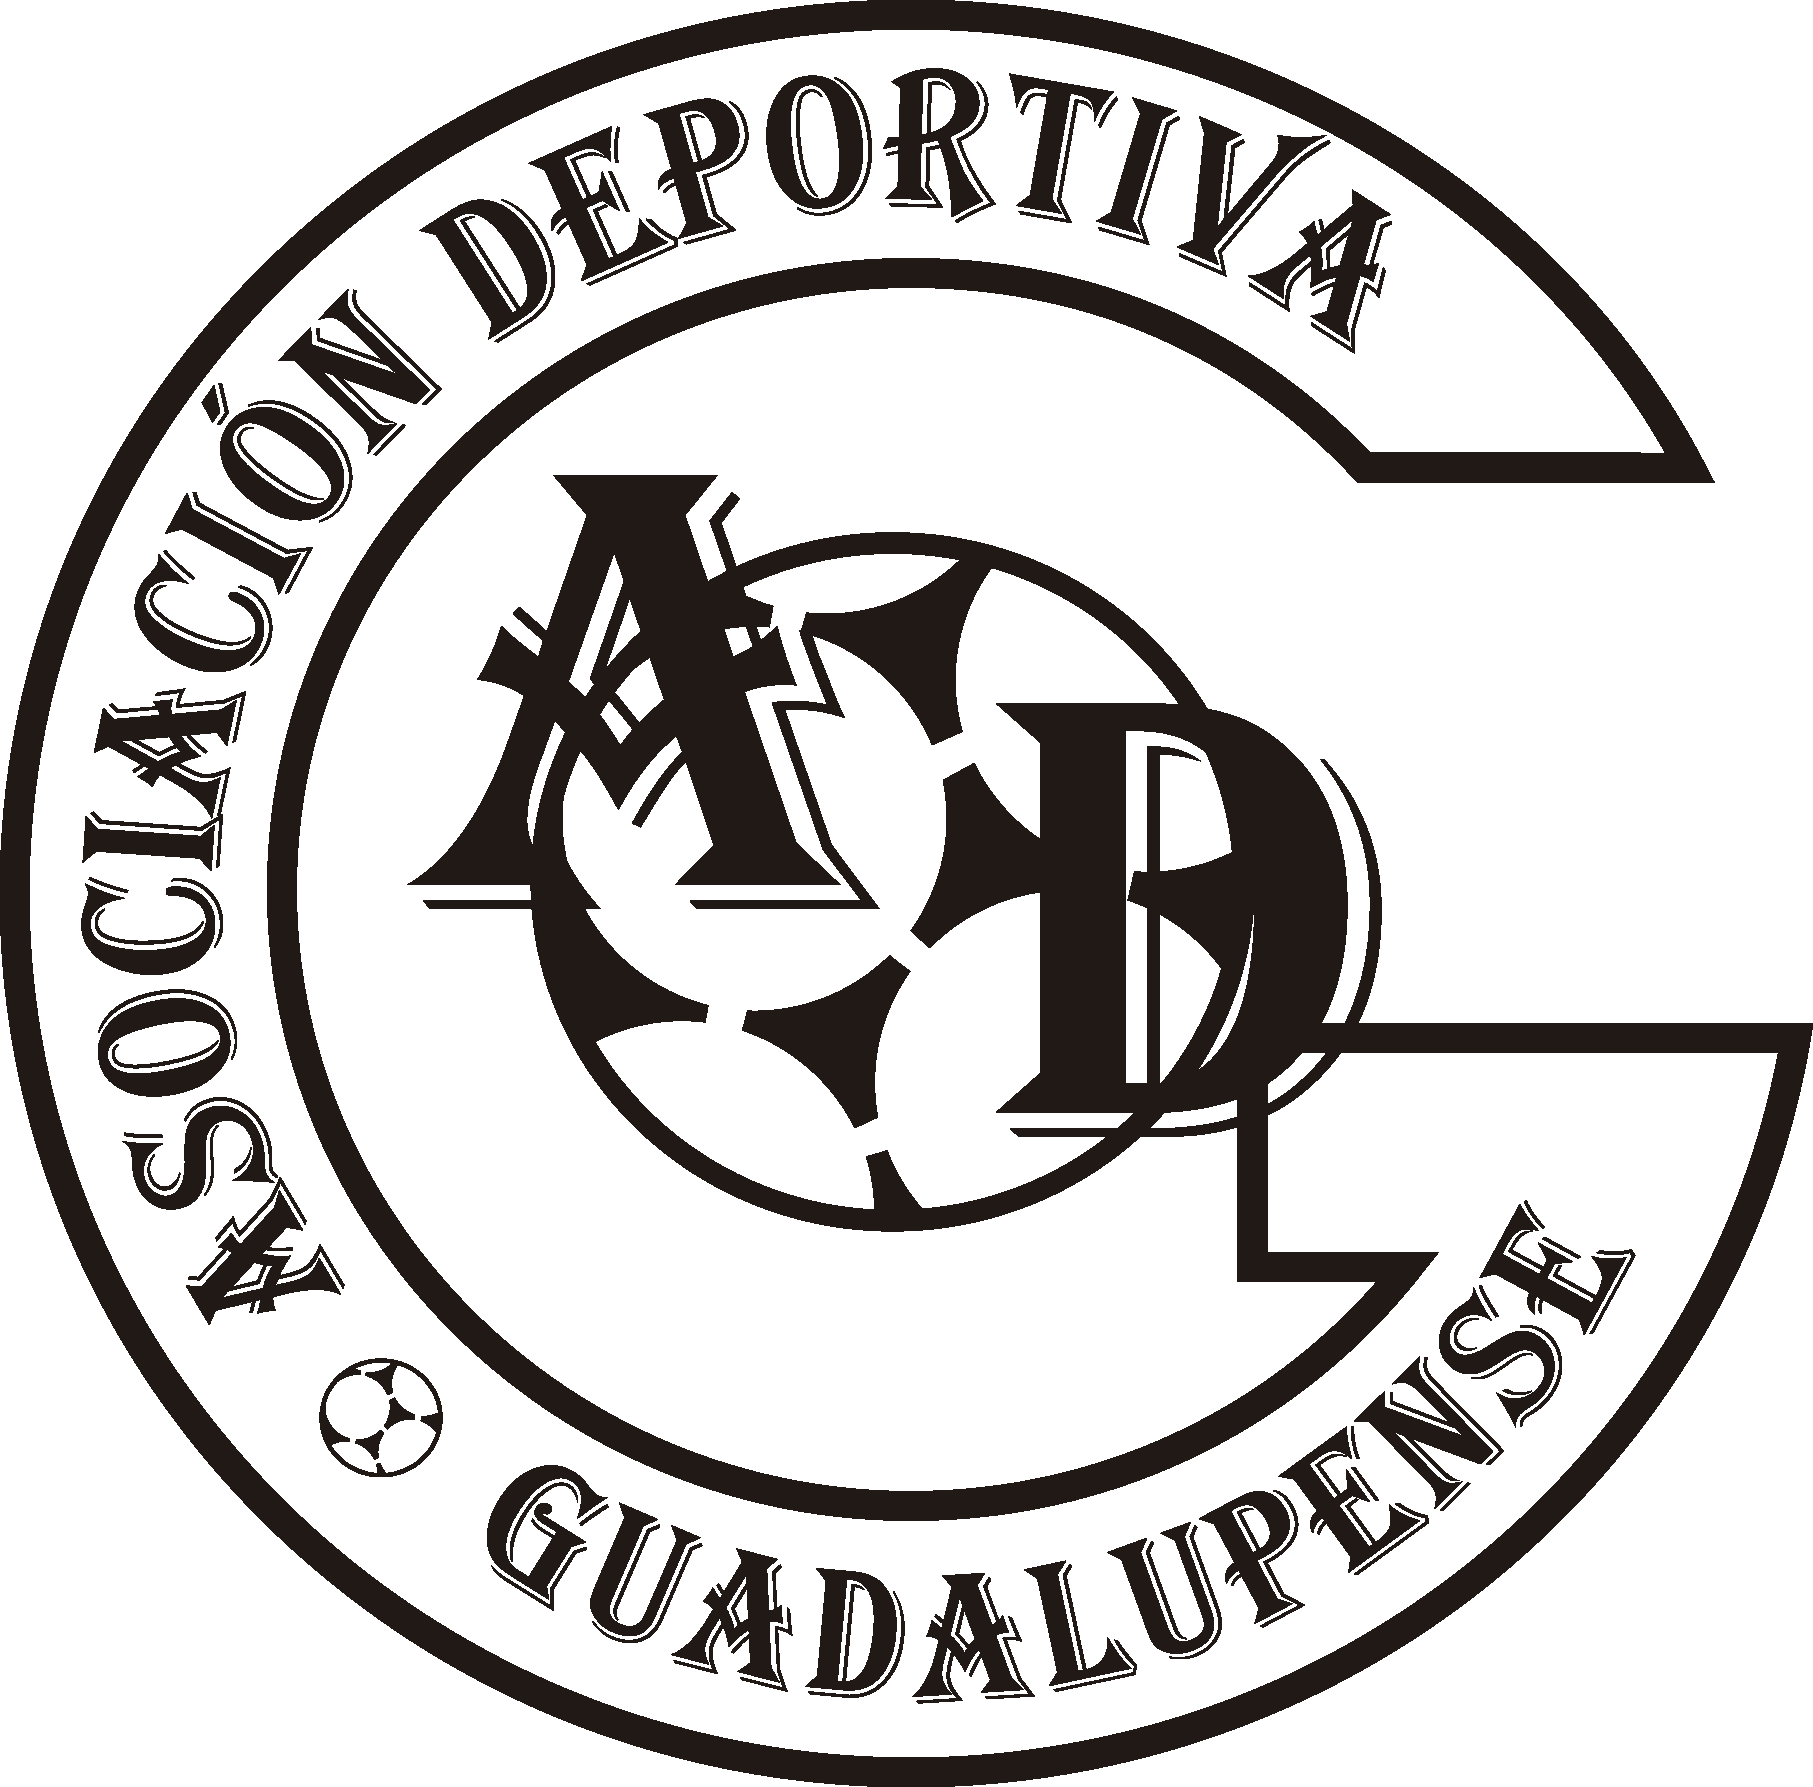 Escudo de la Asociación Deportiva Guadalupense